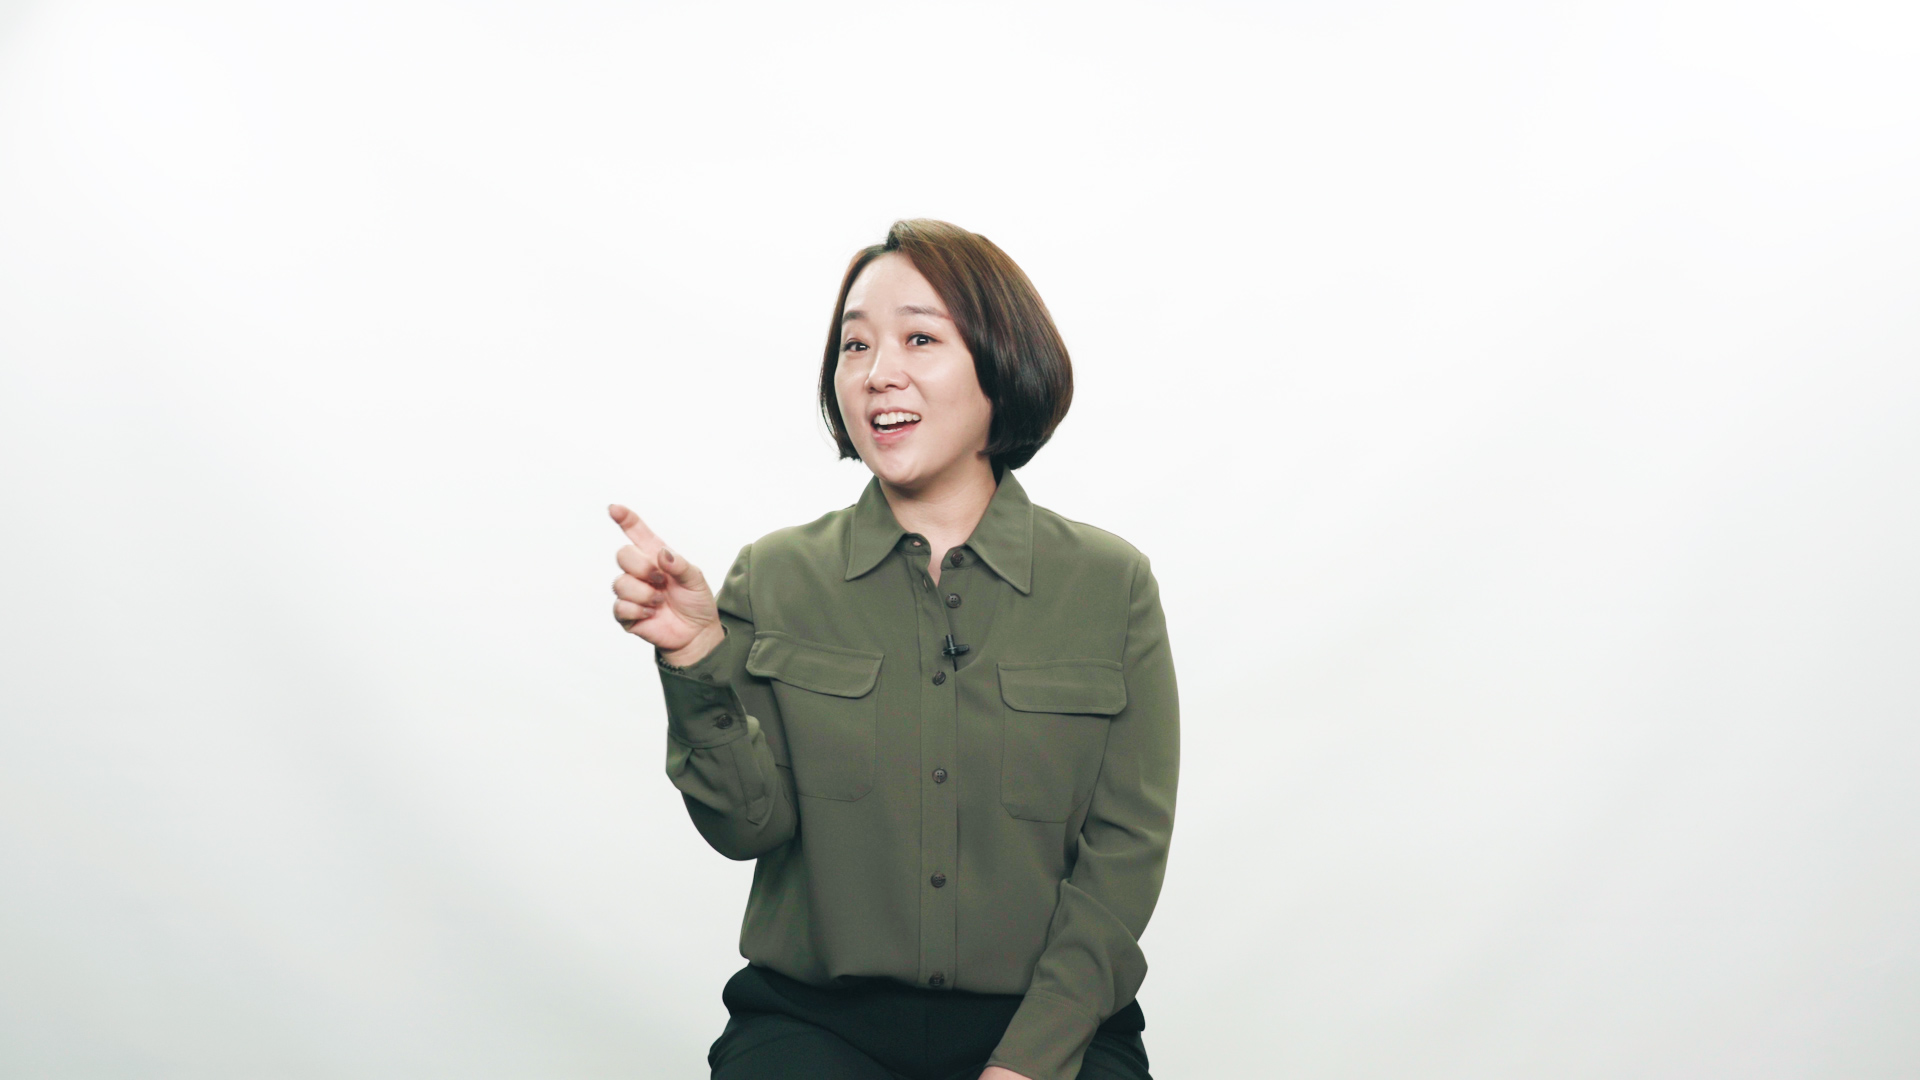 tvN 신박한 정리에서 공간크리에이터 역할을 하고 있는 이지영 대표가 서울신문사 스튜디오에서 인터뷰에 응하고 있는 모습